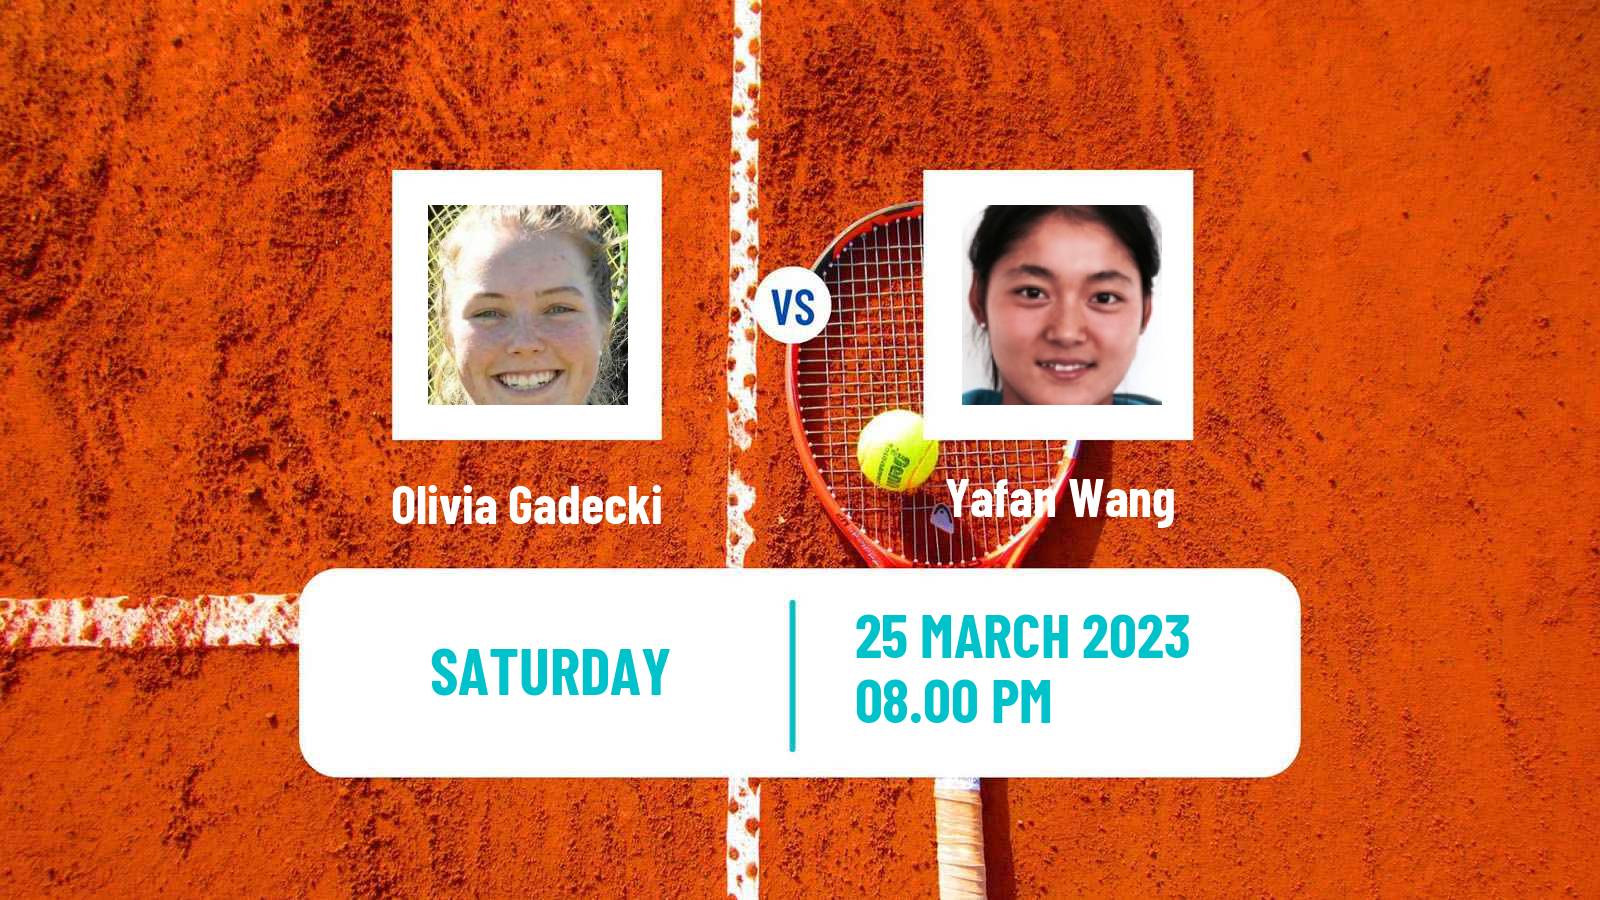 Tennis ITF Tournaments Olivia Gadecki - Yafan Wang